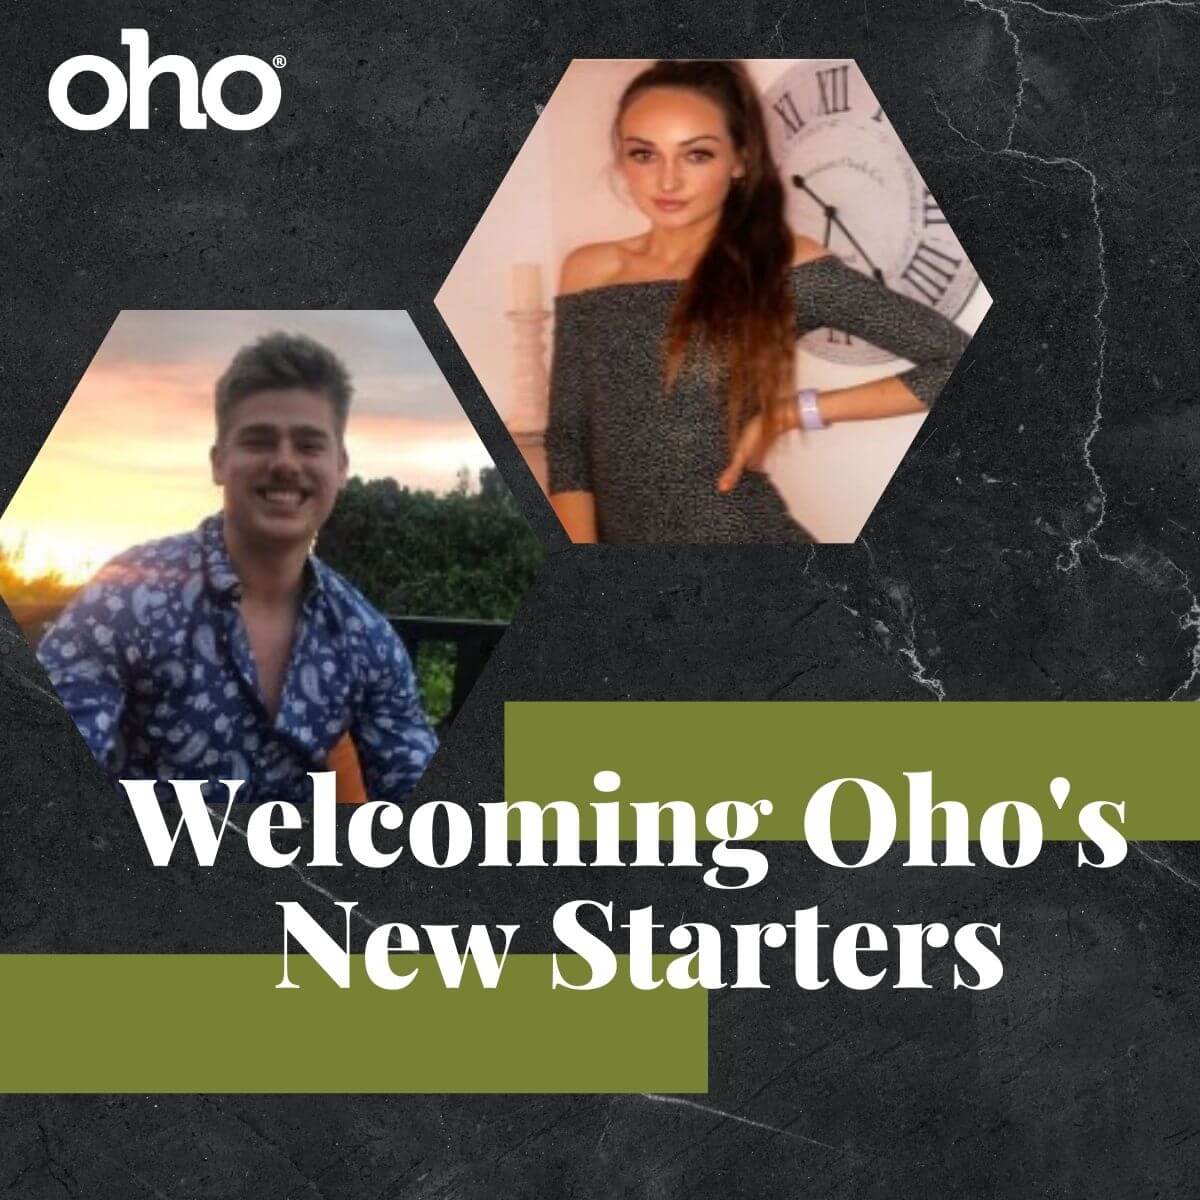 Welcoming Oho’s new starters